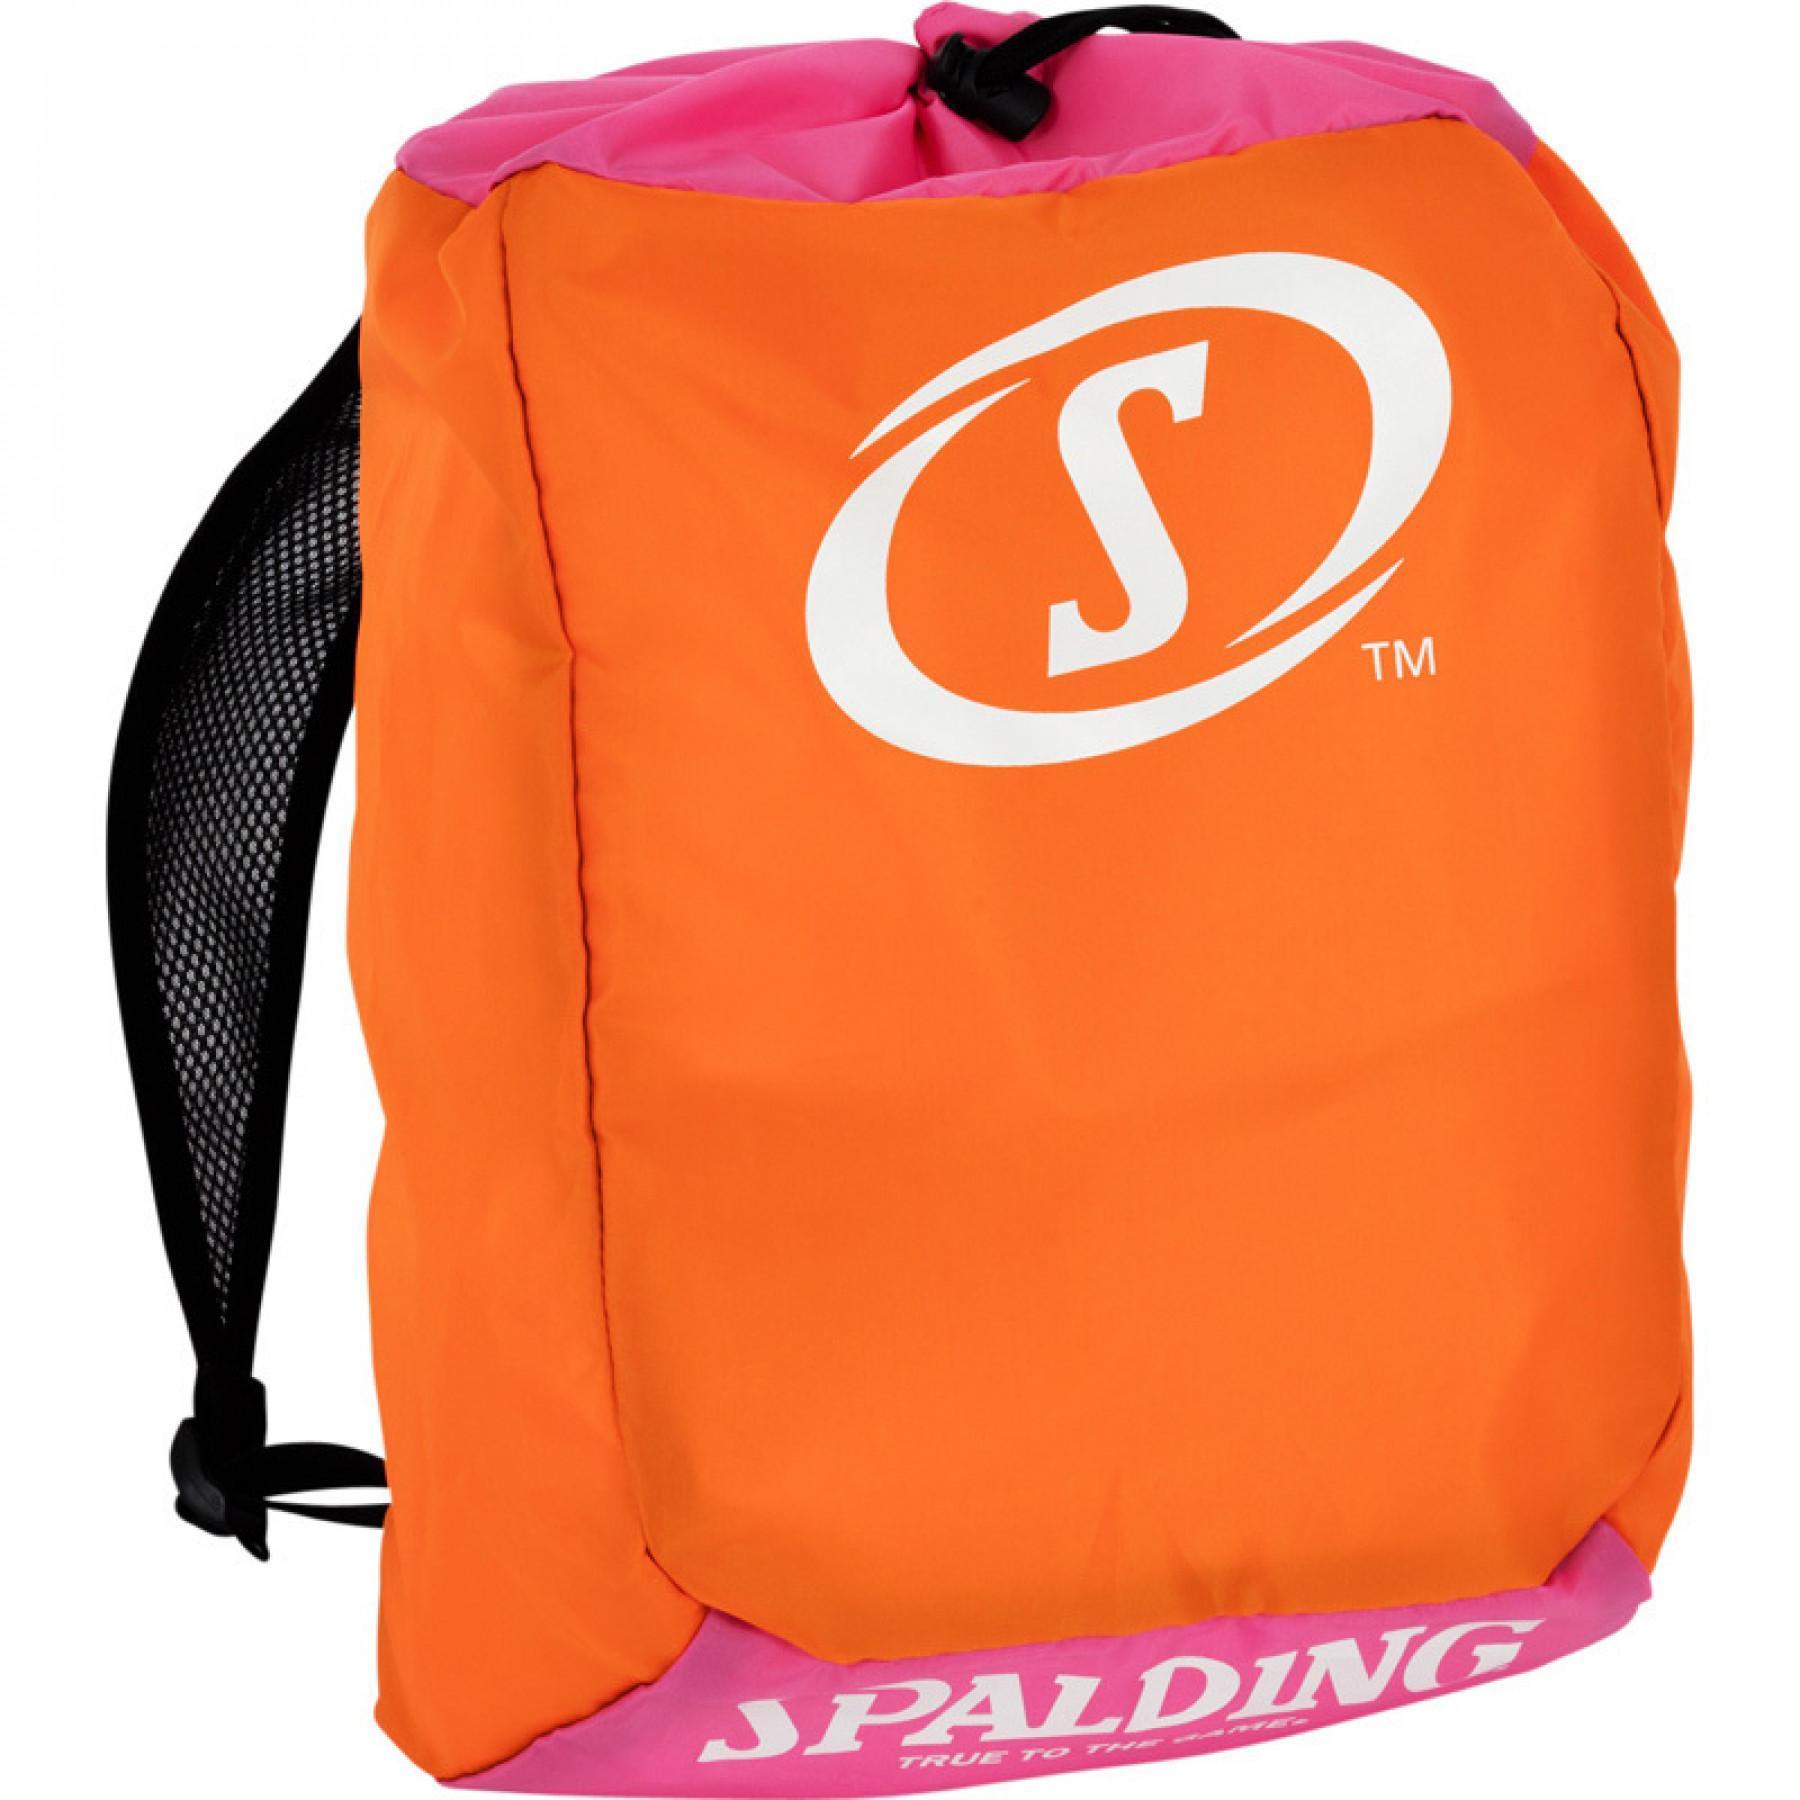 Borsa per bambini Spalding sackpack